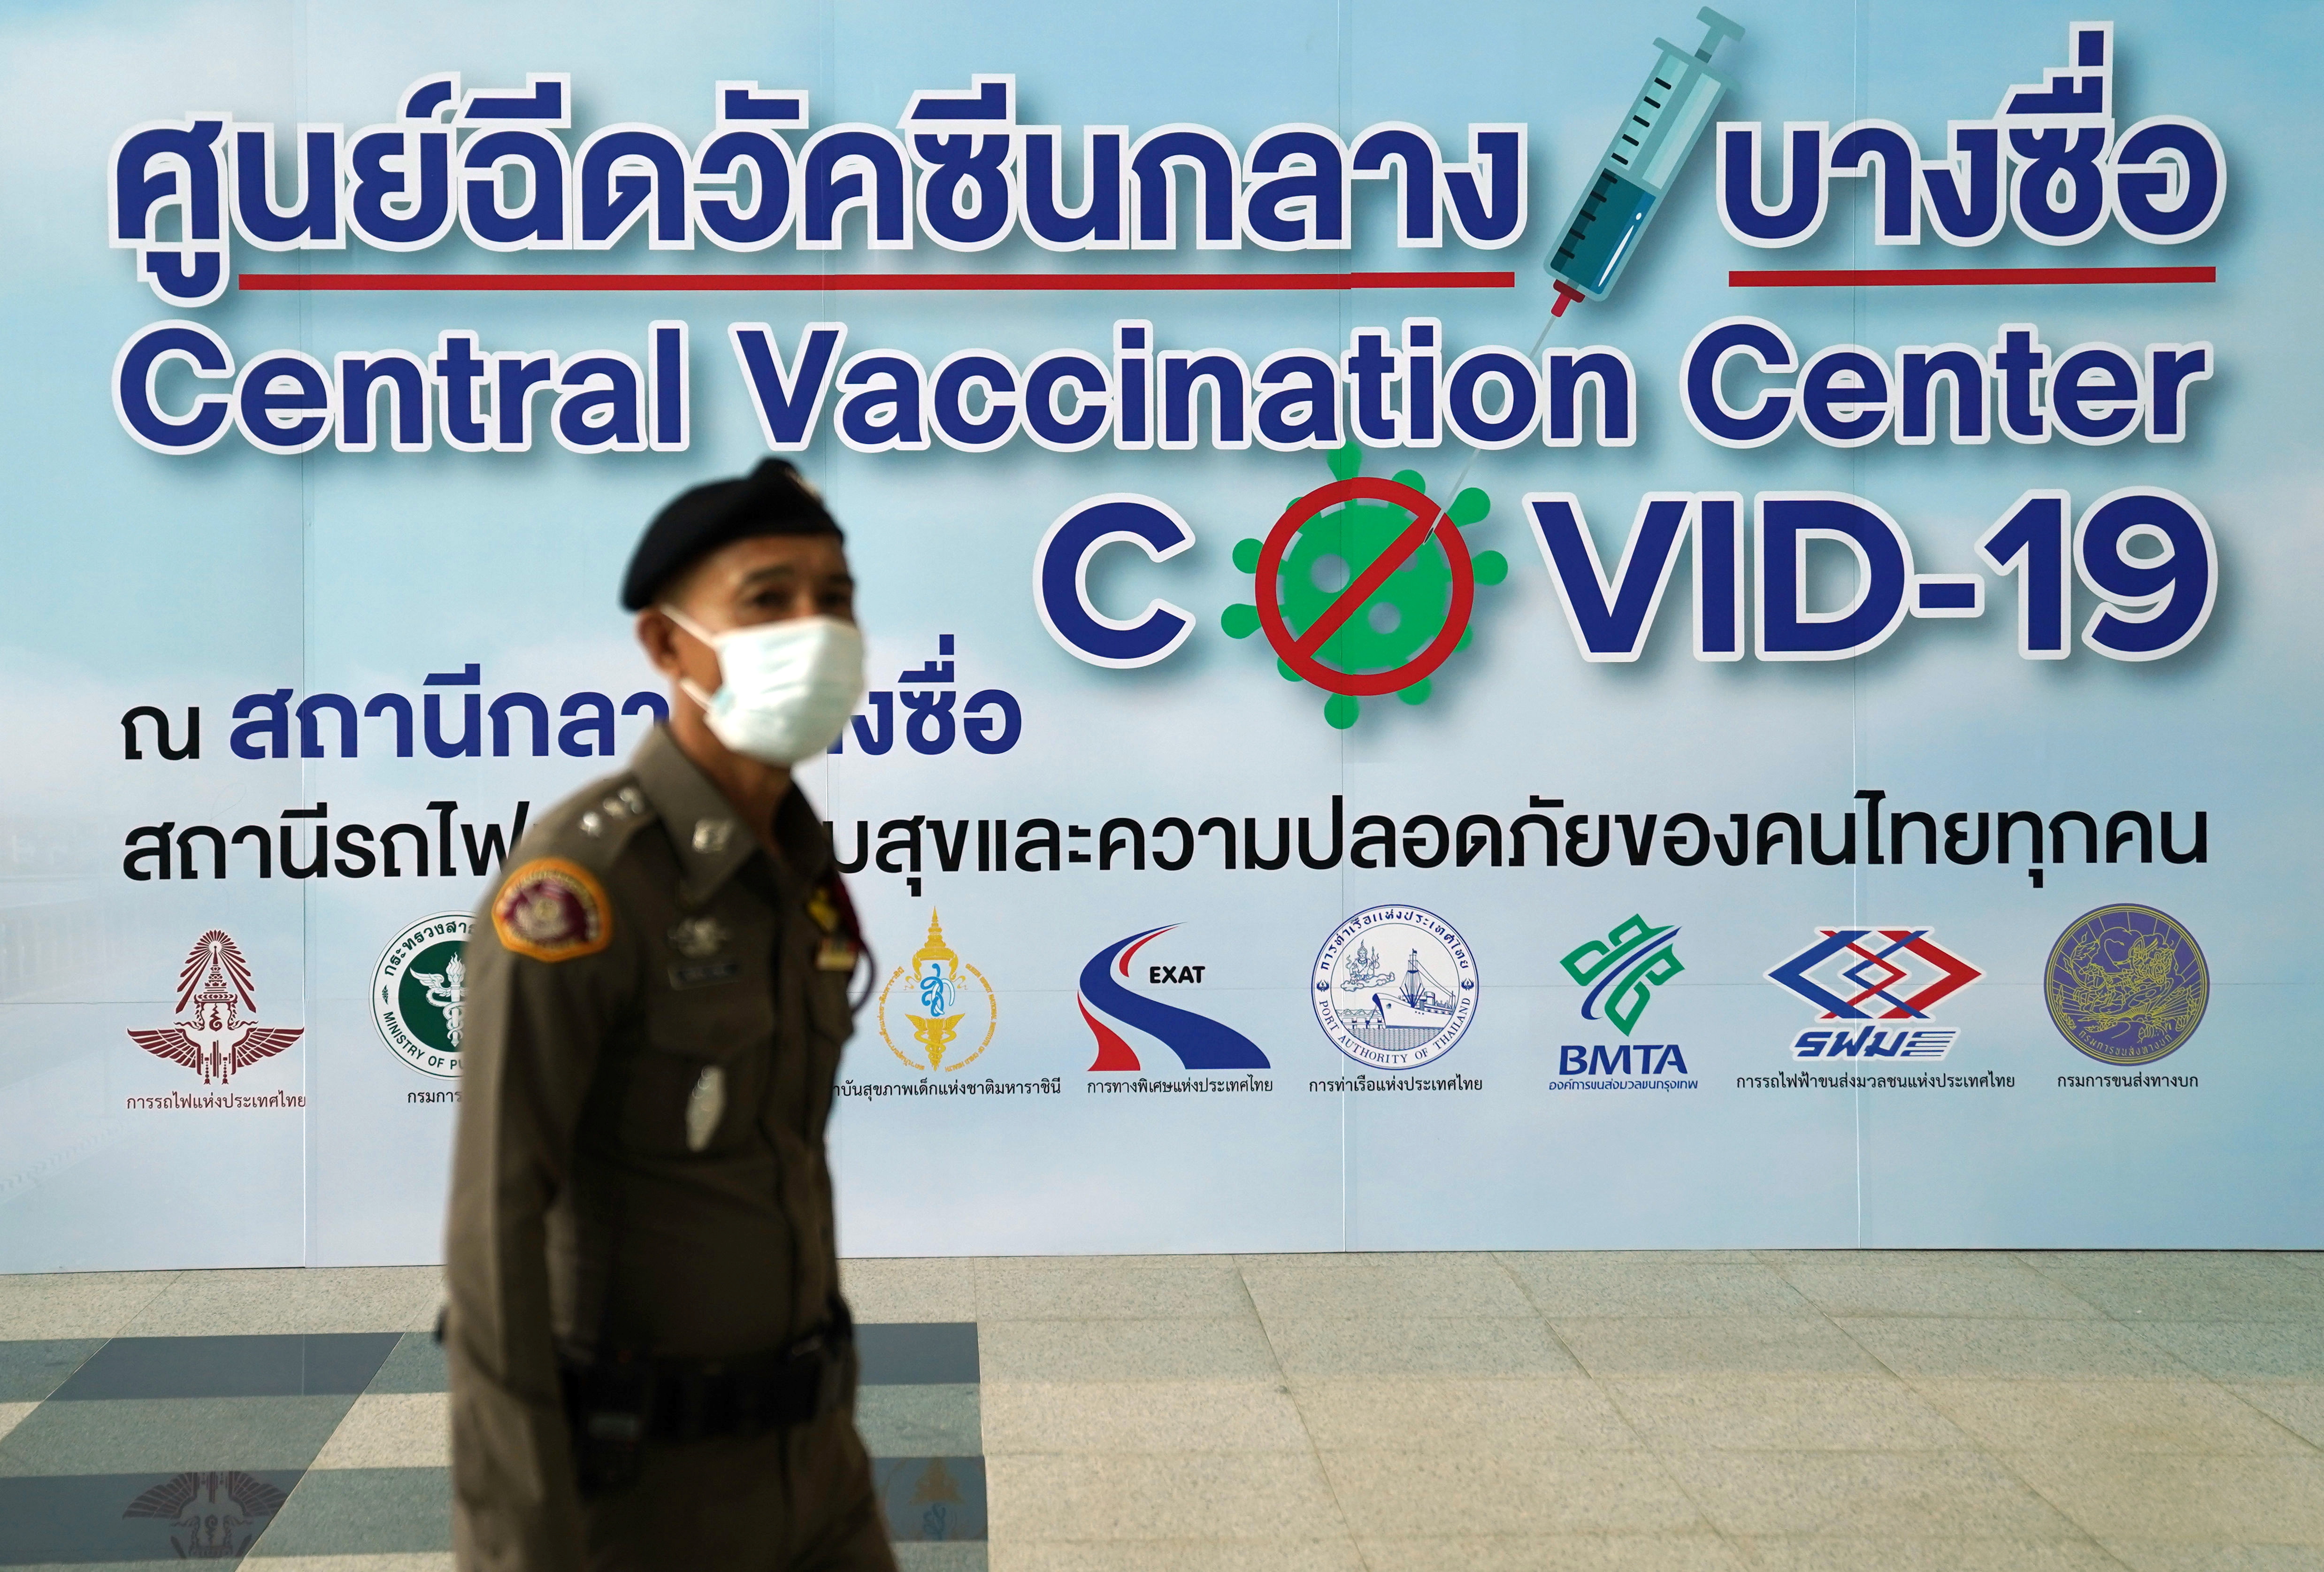 Outbreak of the coronavirus disease (COVID-19) in Bangkok, Thailand